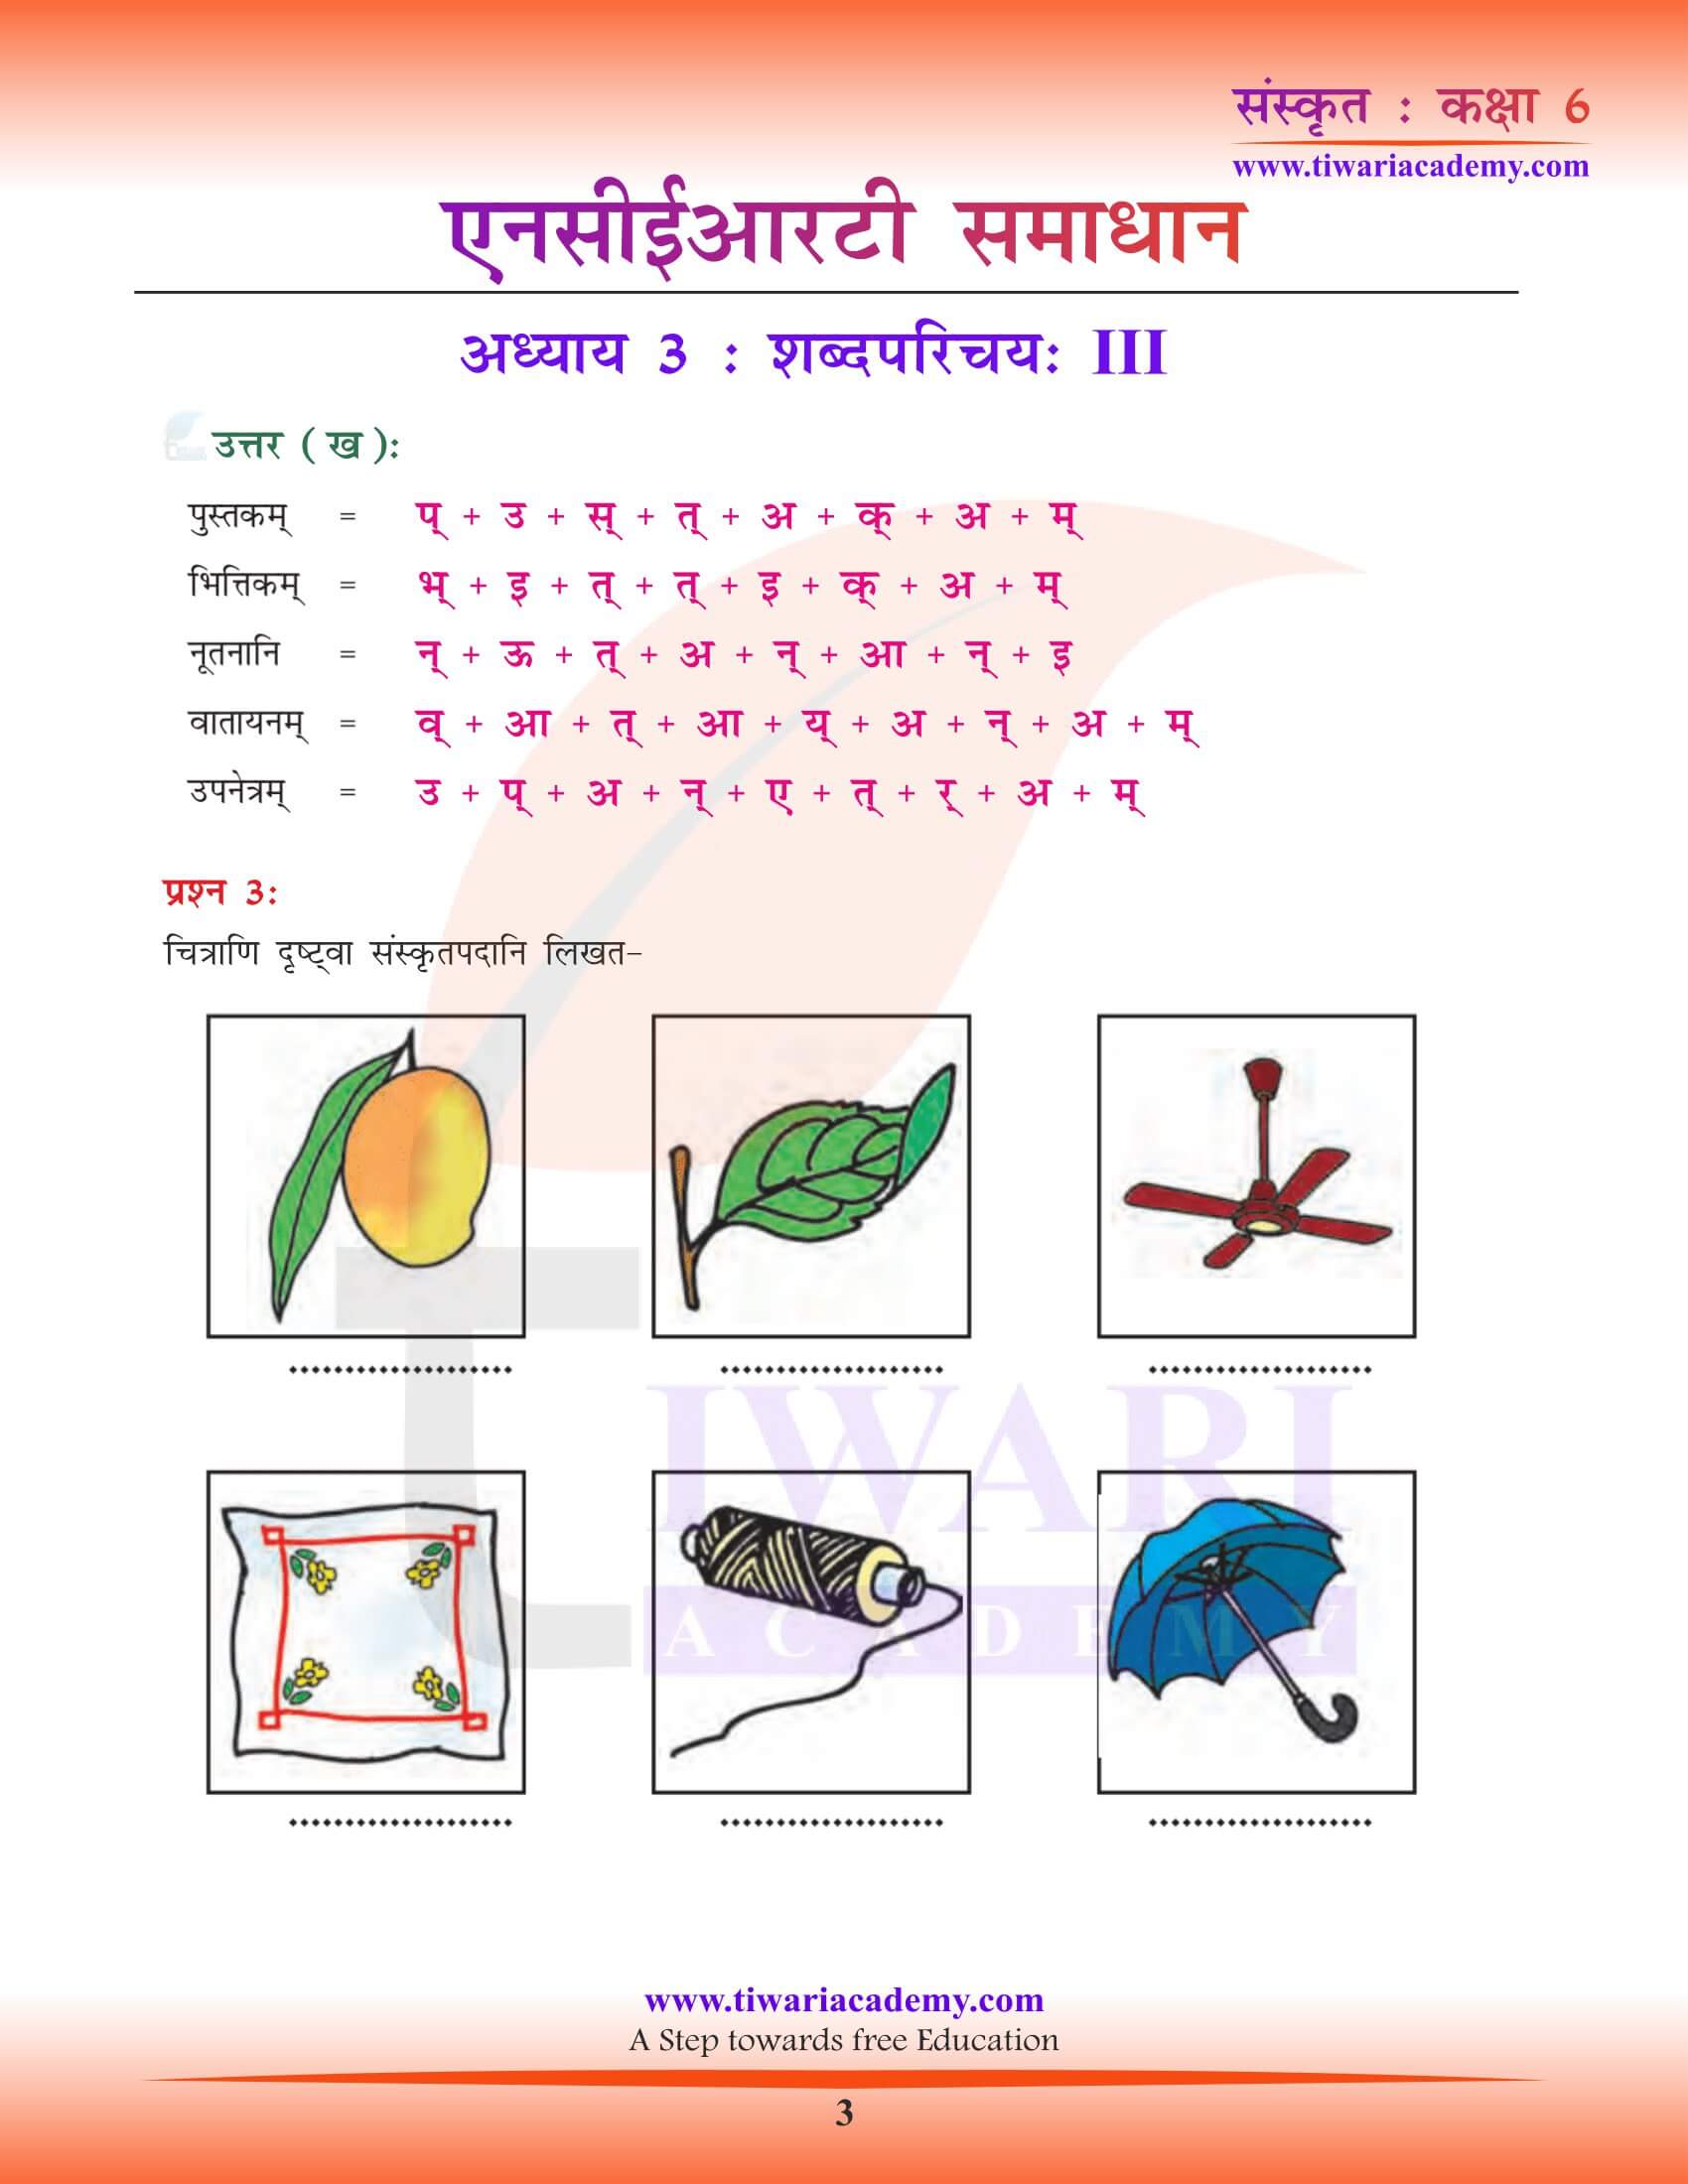 एनसीईआरटी समाधान कक्षा 6 संस्कृत पाठ 3 शब्द परिचयः 3 हिंदी ट्रांसलेशन